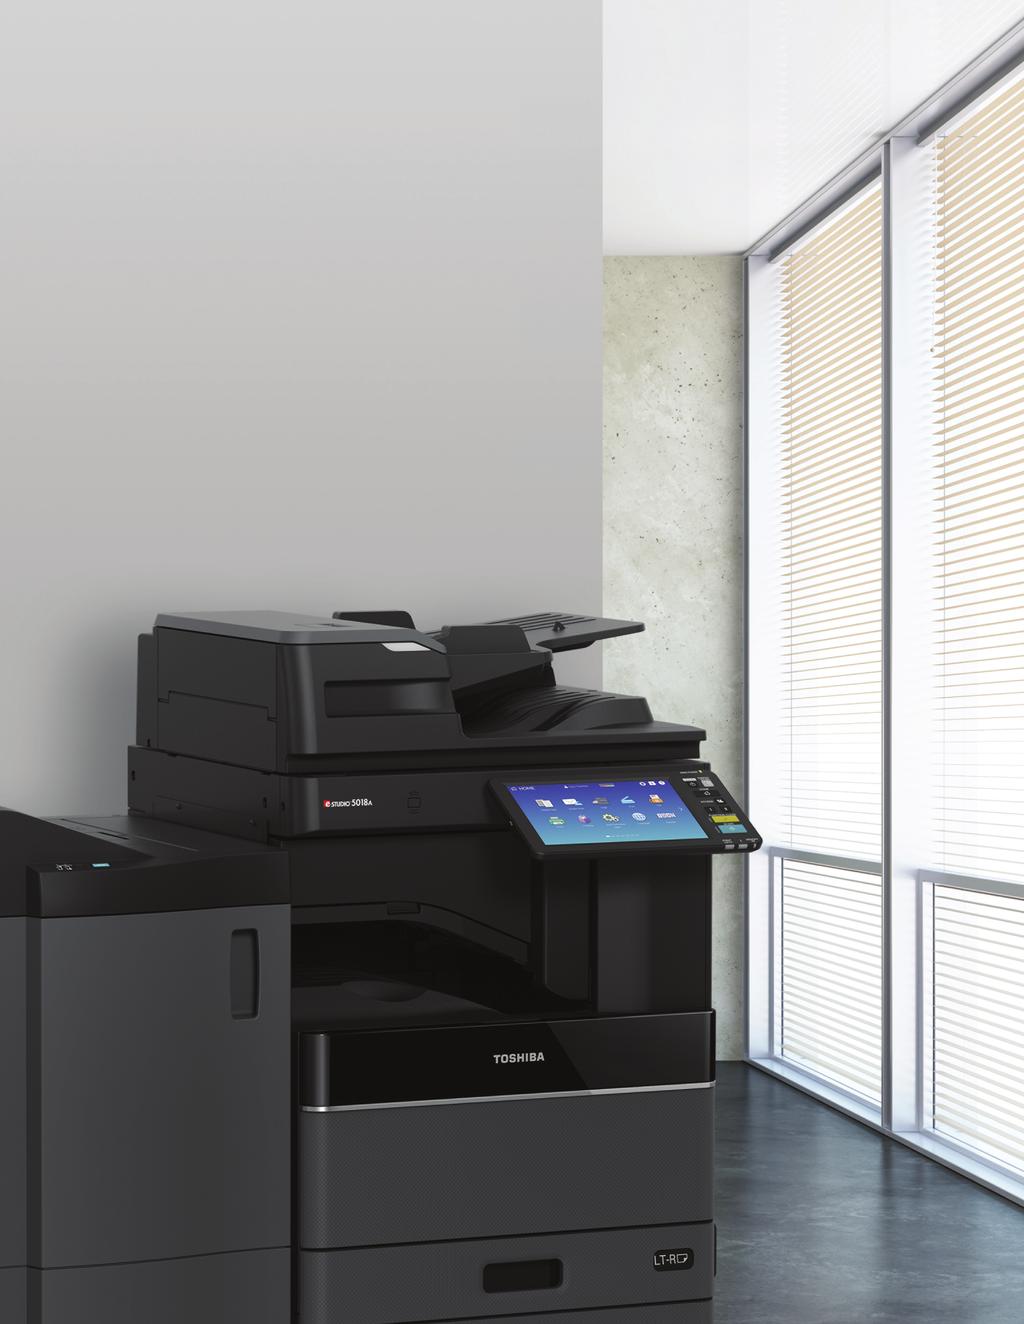 lack & White Multifunction Printer B p to 50 PPM U edium/large